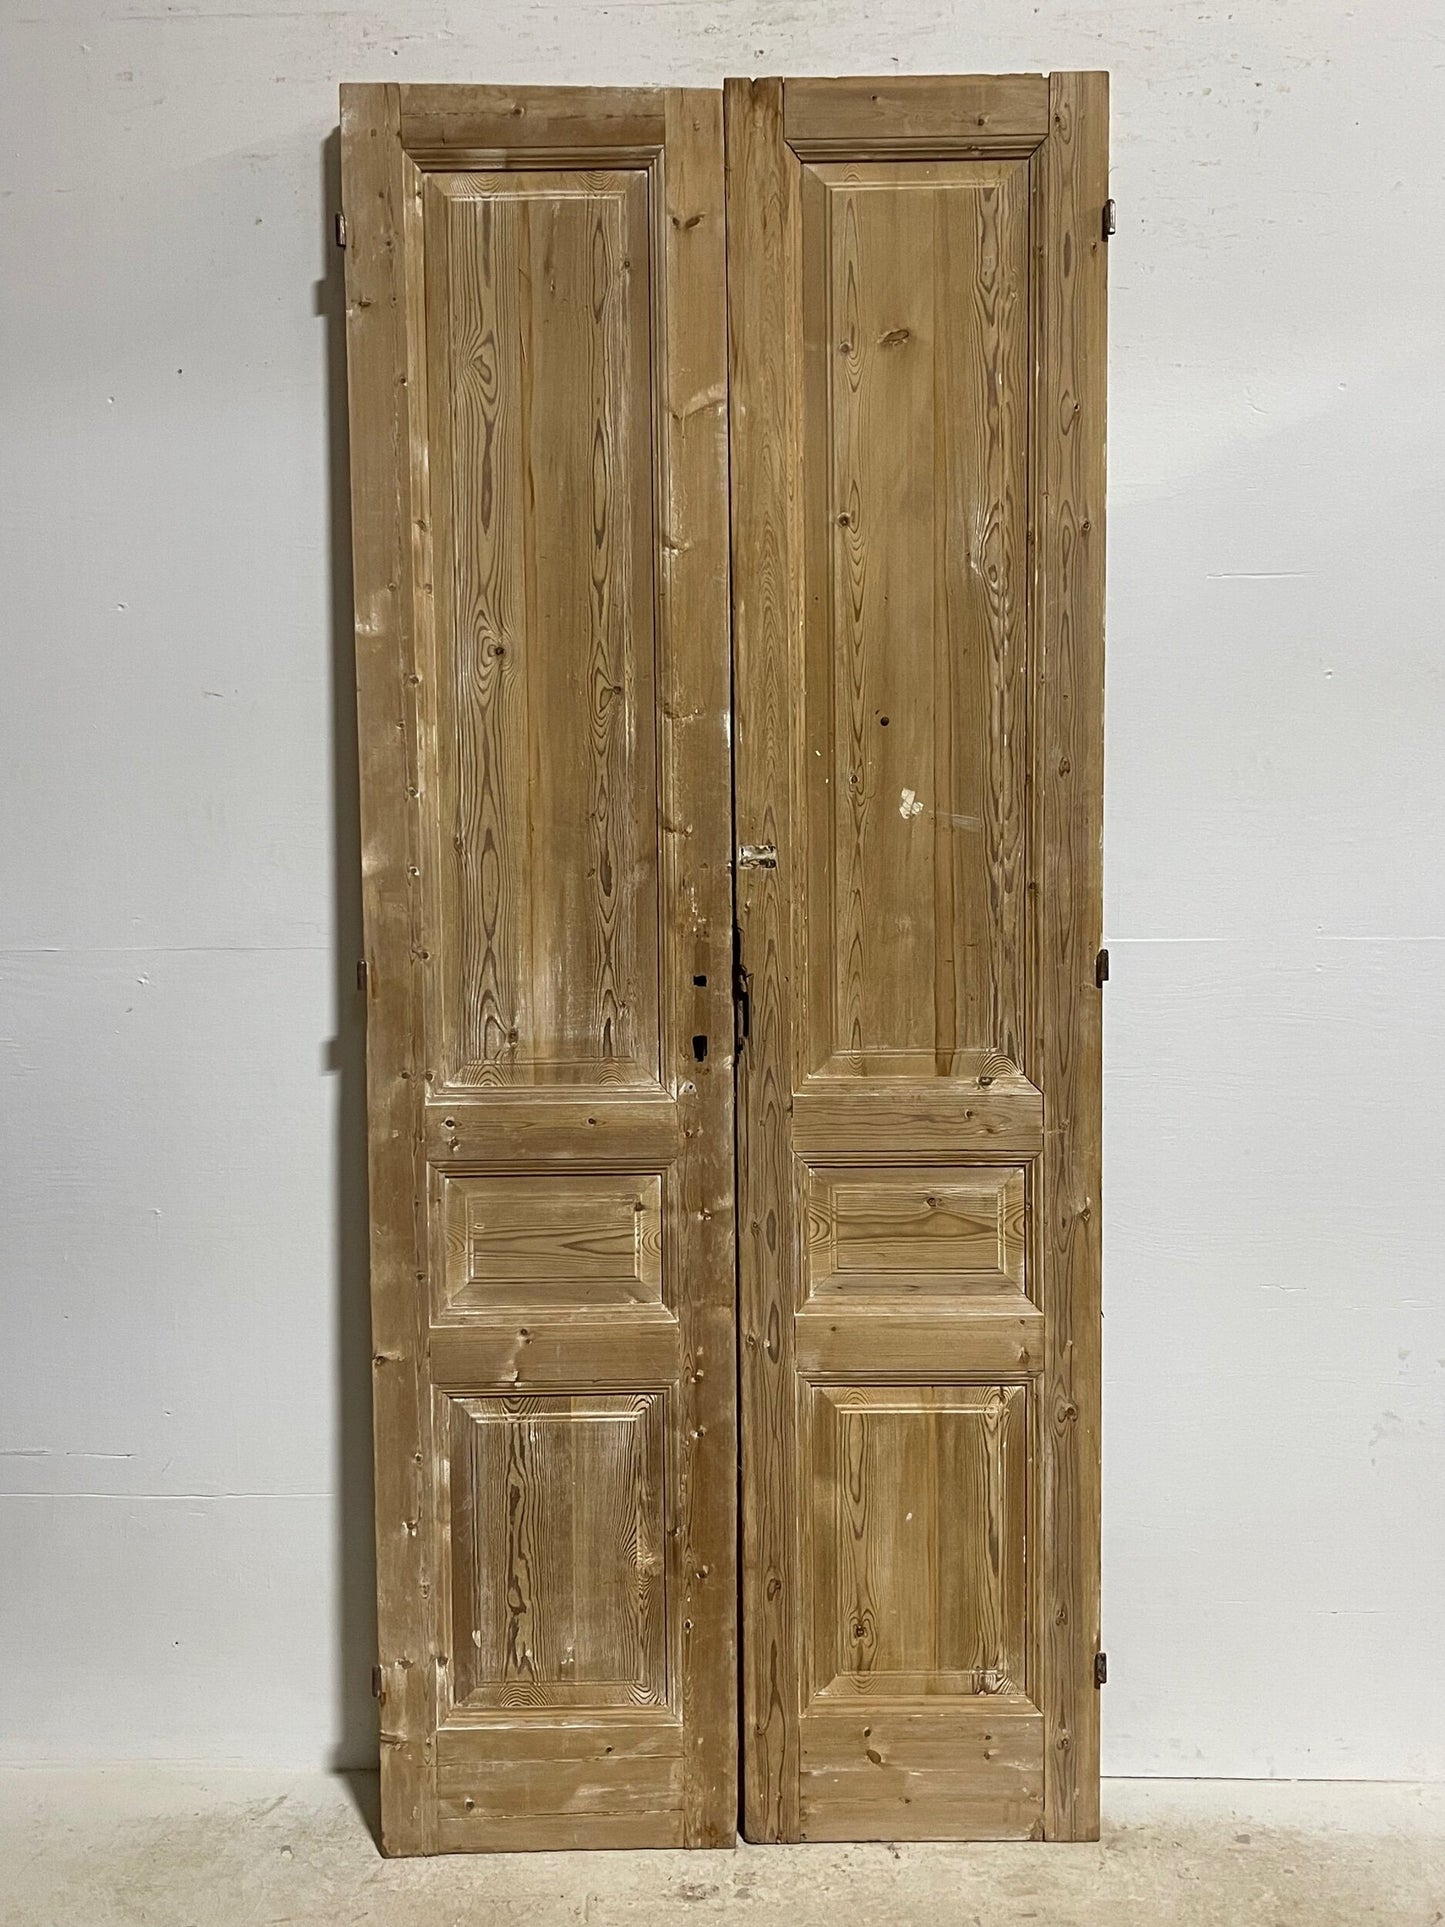 Antique French doors (91.5x38.25) H0201s